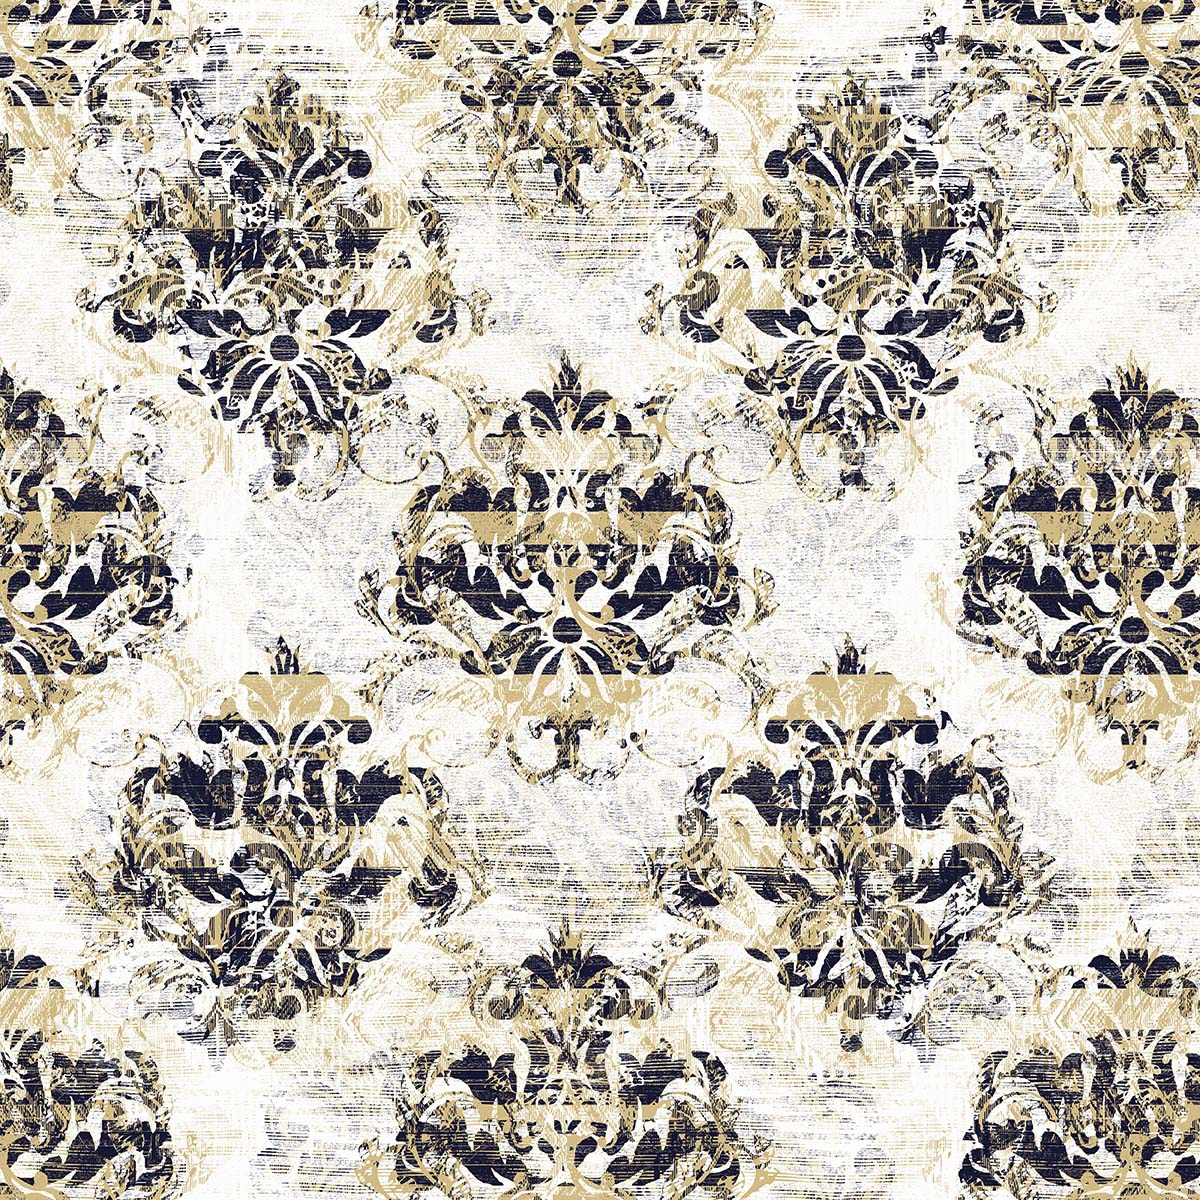 A pattern on a fabric